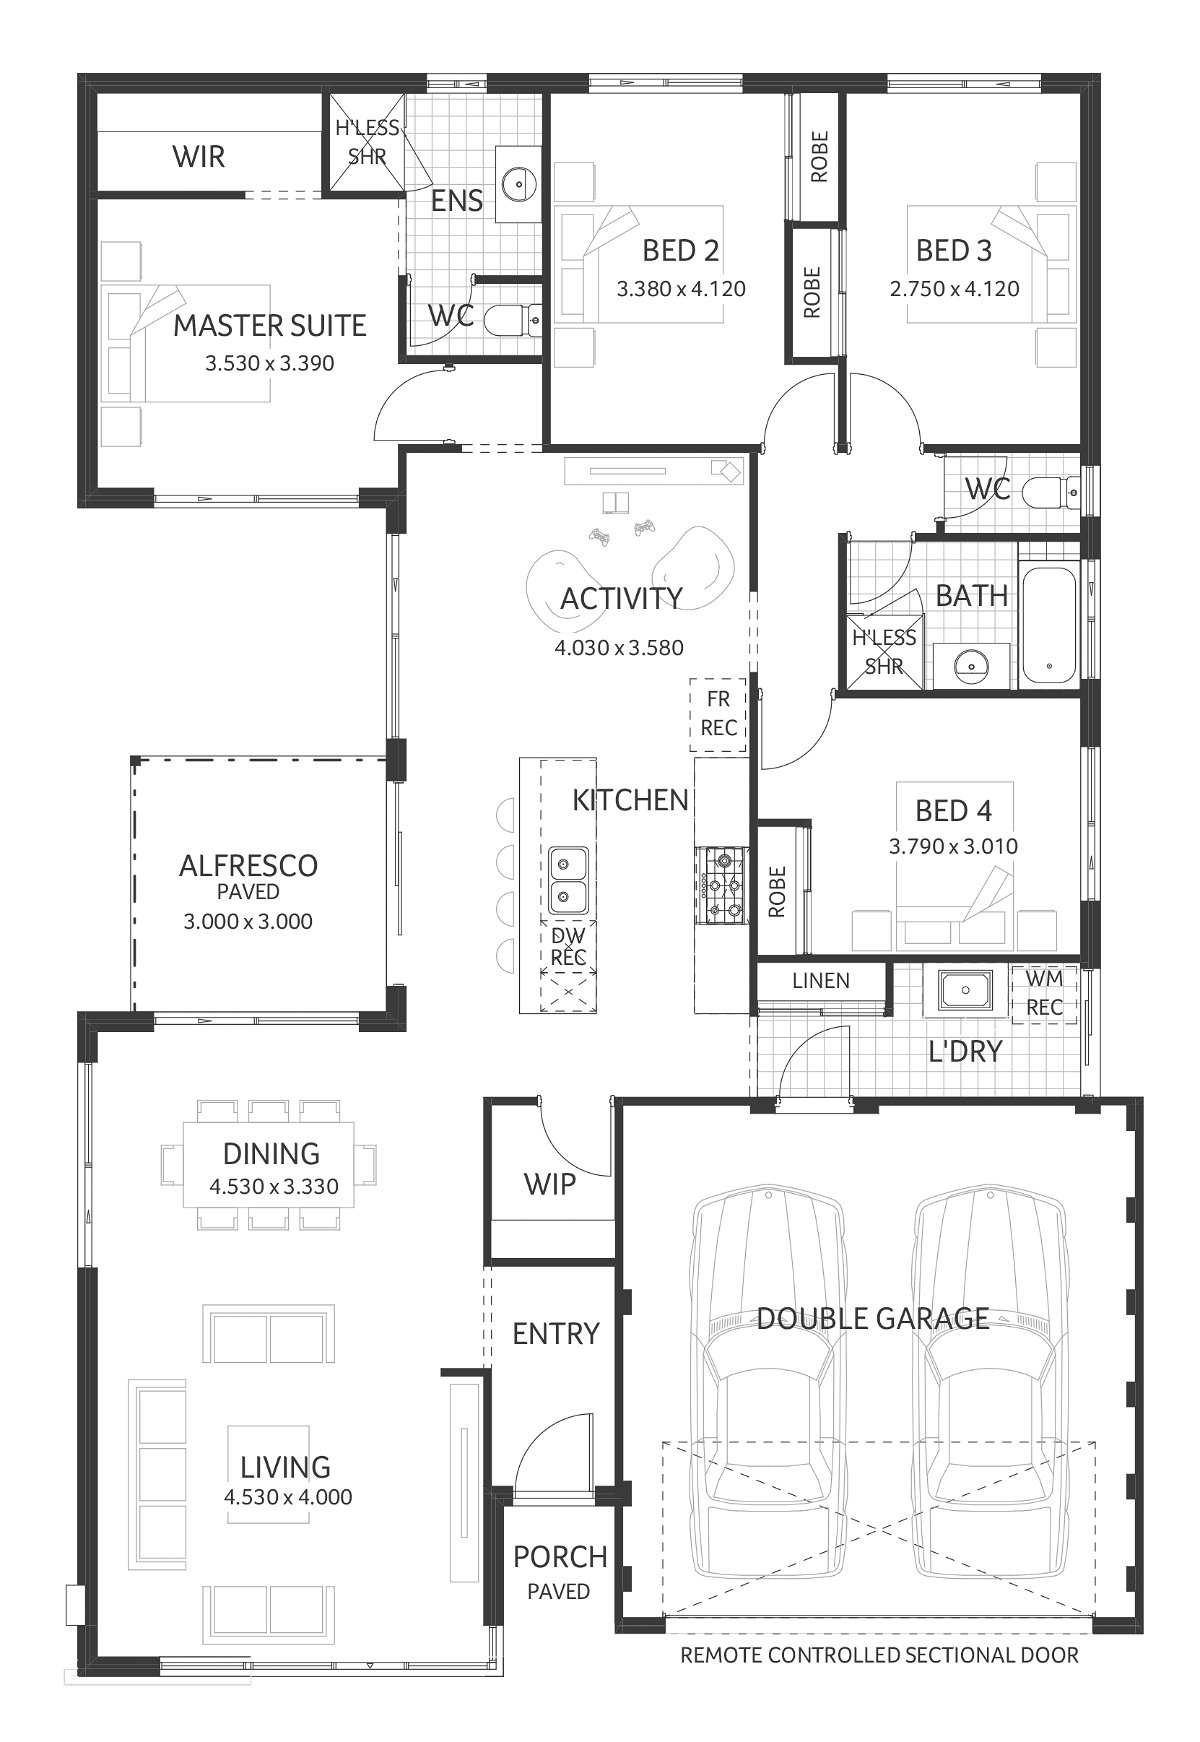 Plunkett Homes - Coogee | Lifestyle - Floorplan - Coogee Lifestyle Marketing Plan Cropped Jpg